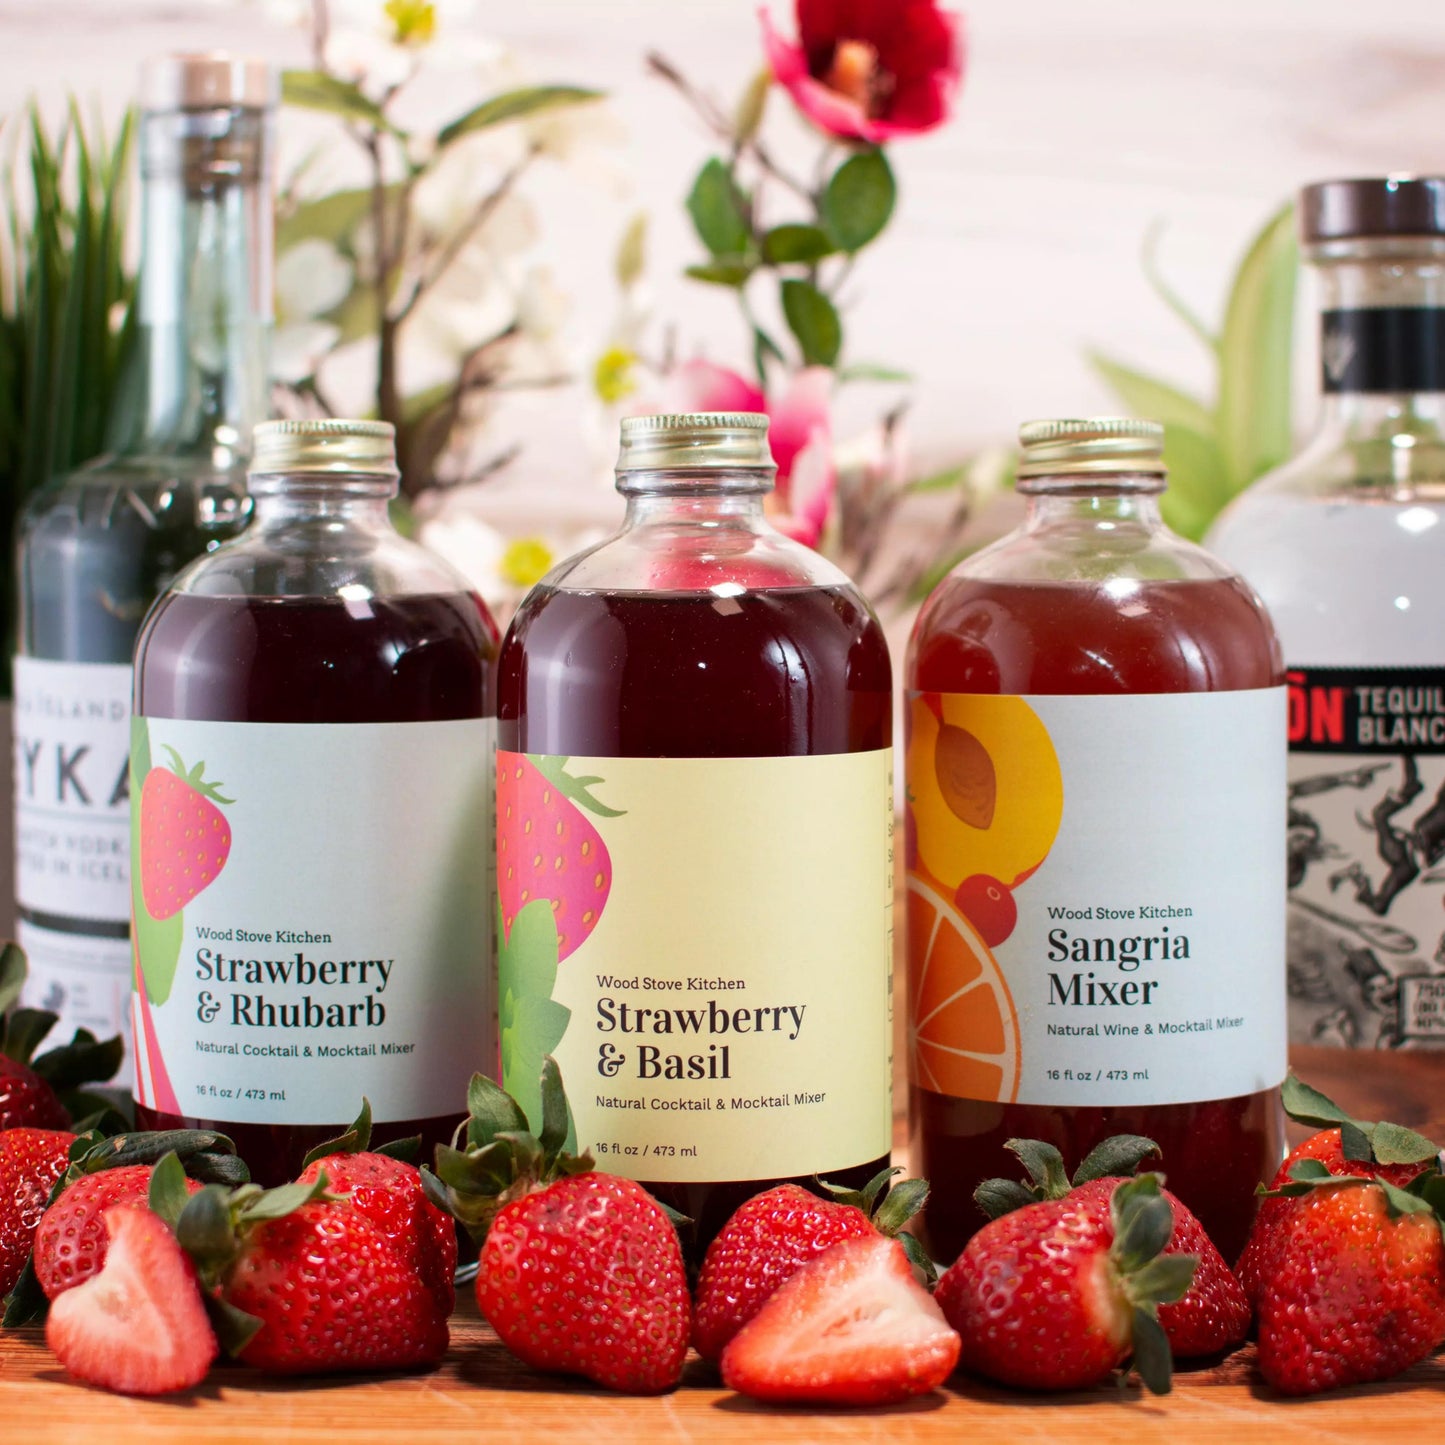 Strawberry Rhubarb Natural Cocktail & Mocktail Mixer 16 fl oz Lifestyle